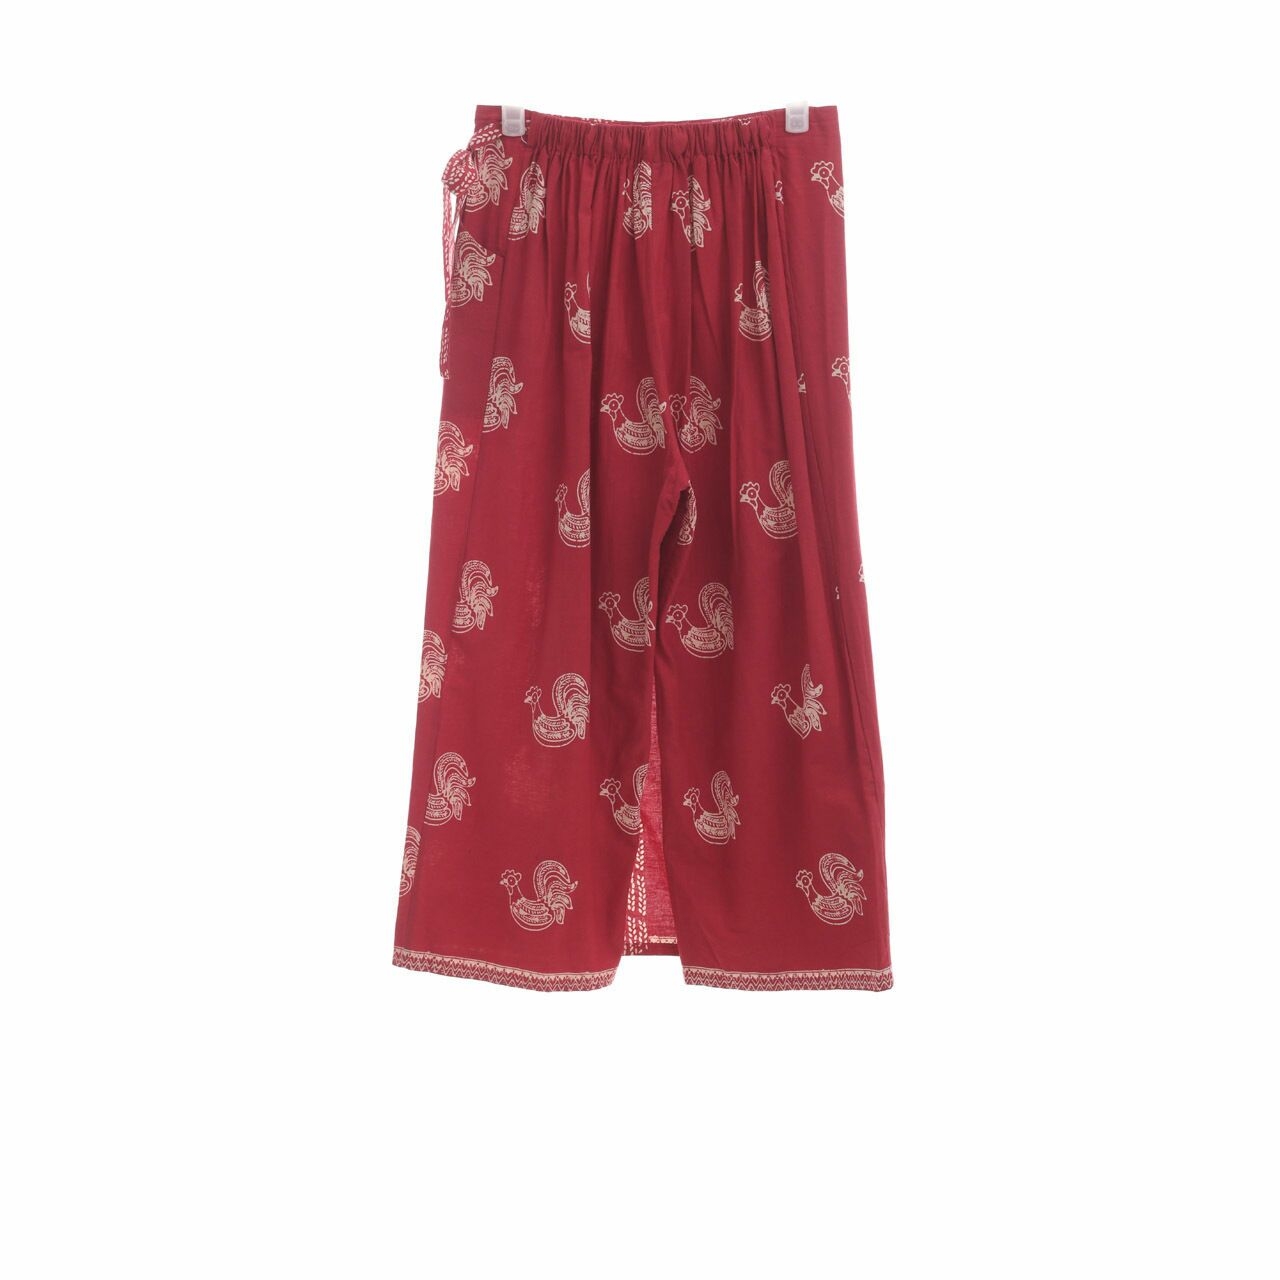 Lemari Lila Red Printed Culottes Long Pants